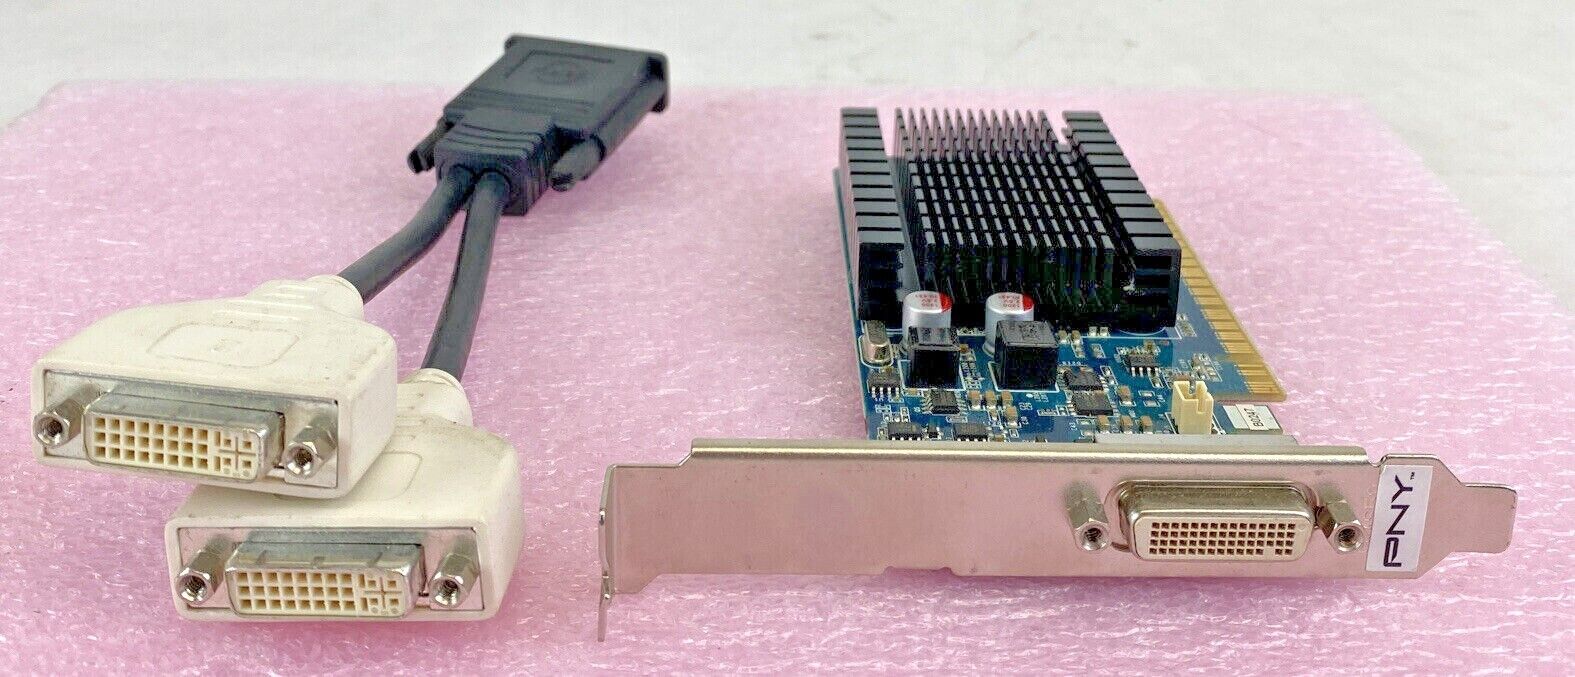 PNY GeForce 8400GS 1GB DDR3 DMS-59 PCI-E 2.0 Video Card w/ Molex DSM-59 to DVI